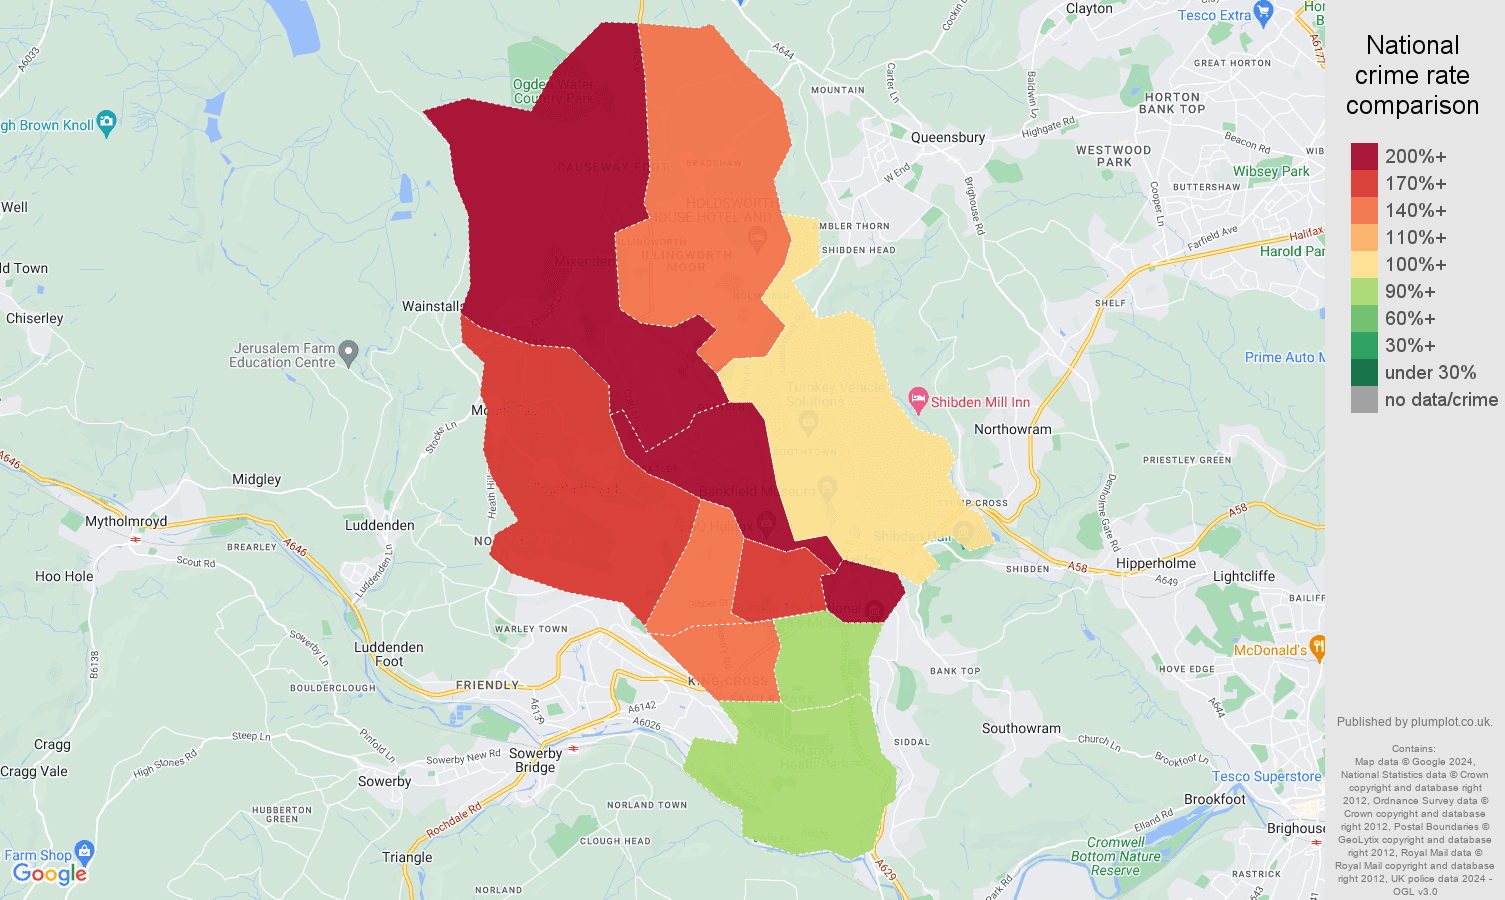 Halifax crime rate comparison map